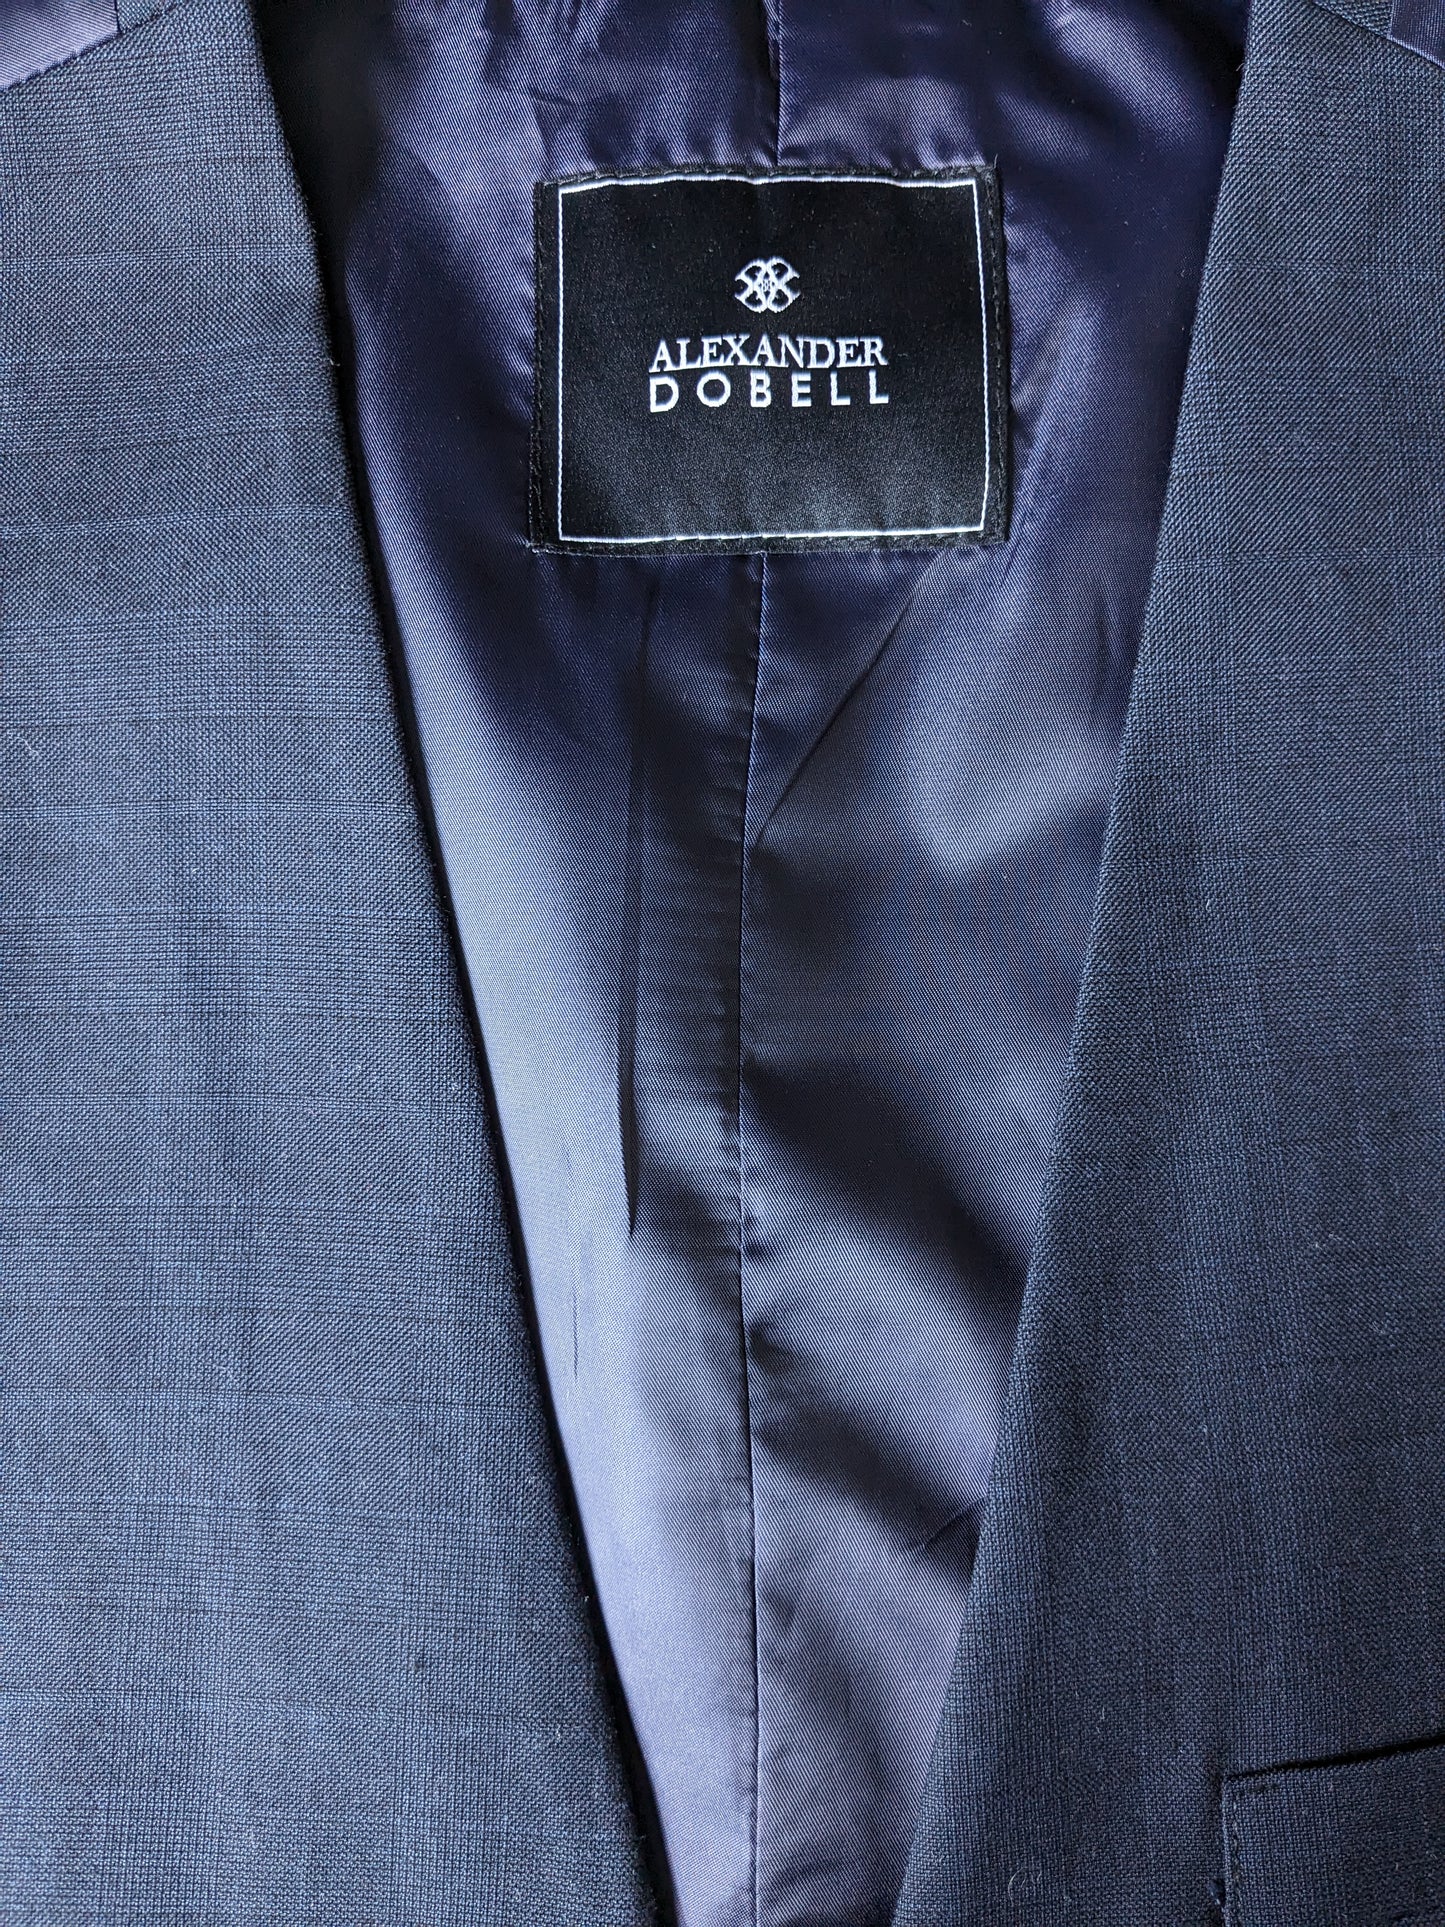 Alexander Dobell waistcoat. Black blue checked. Size 54 / L. #323